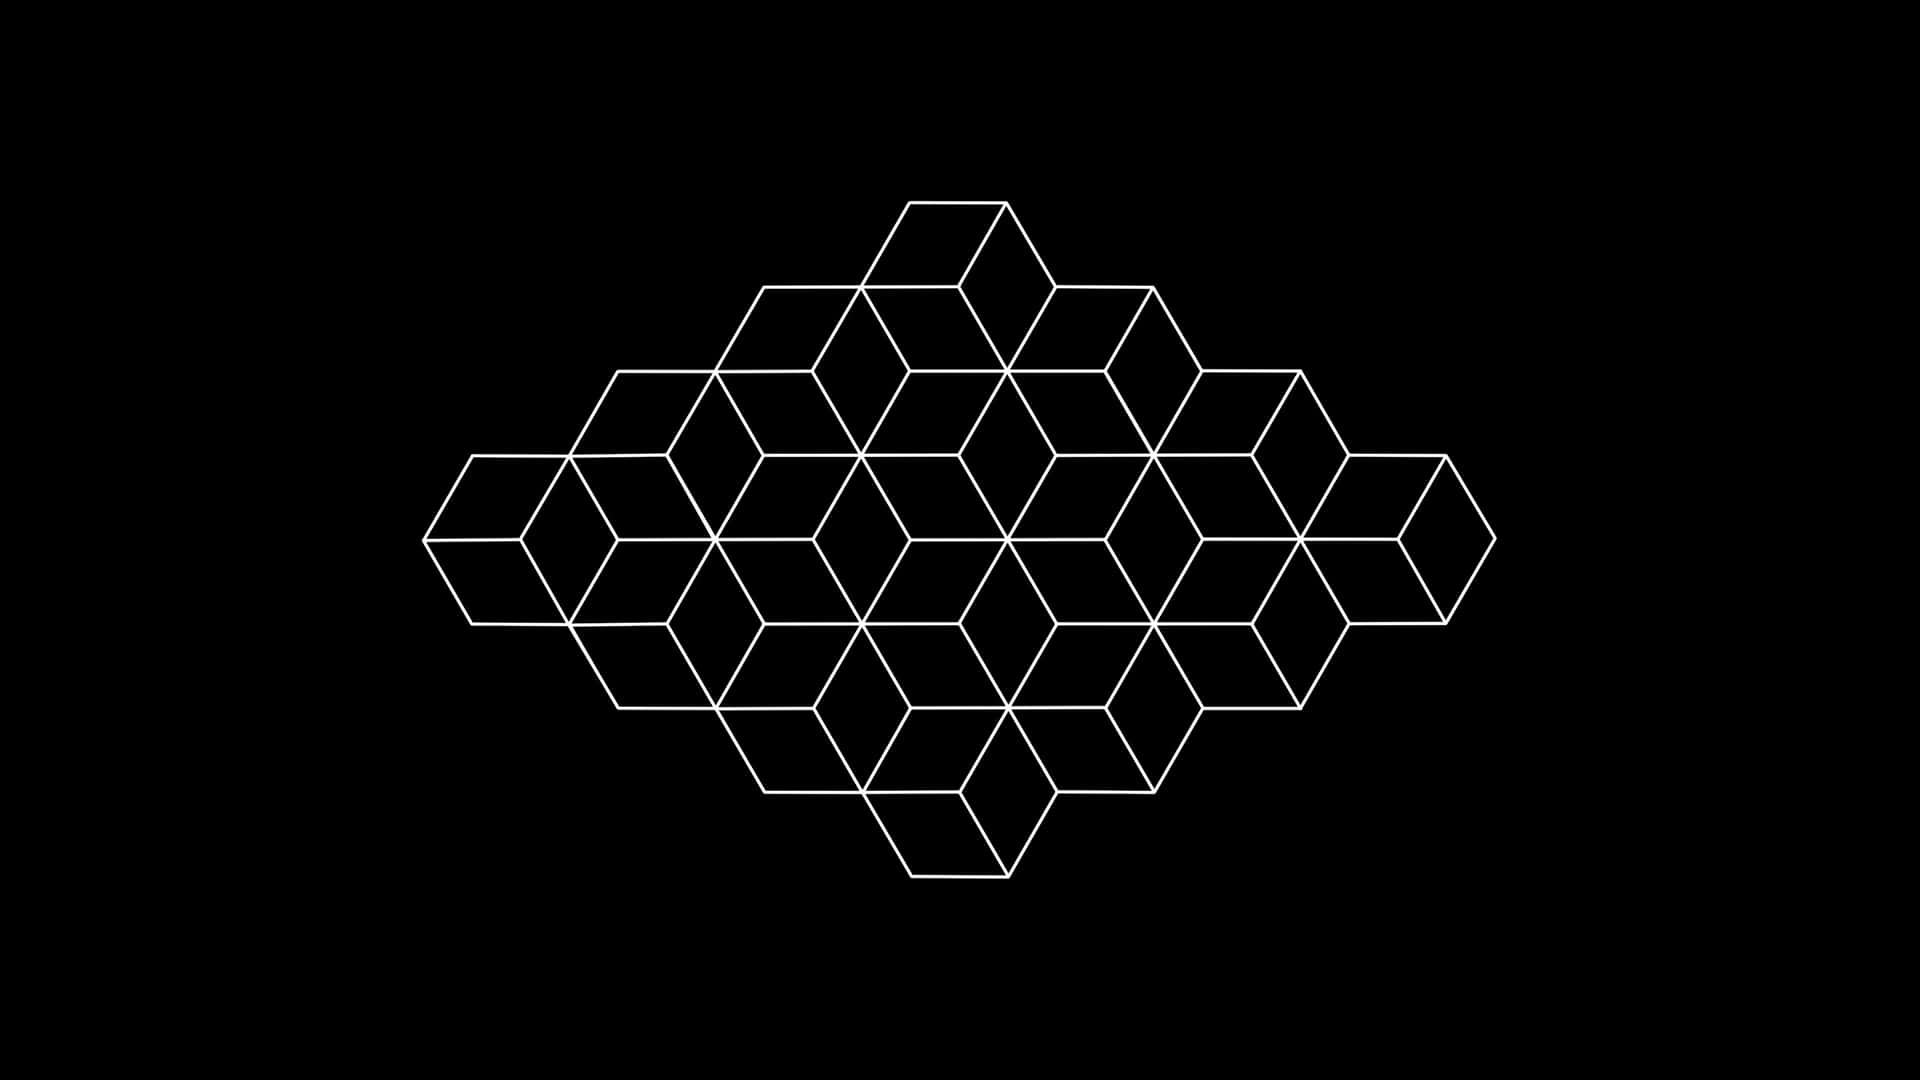 Hexagonal Pattern Blackand White4 K Wallpaper